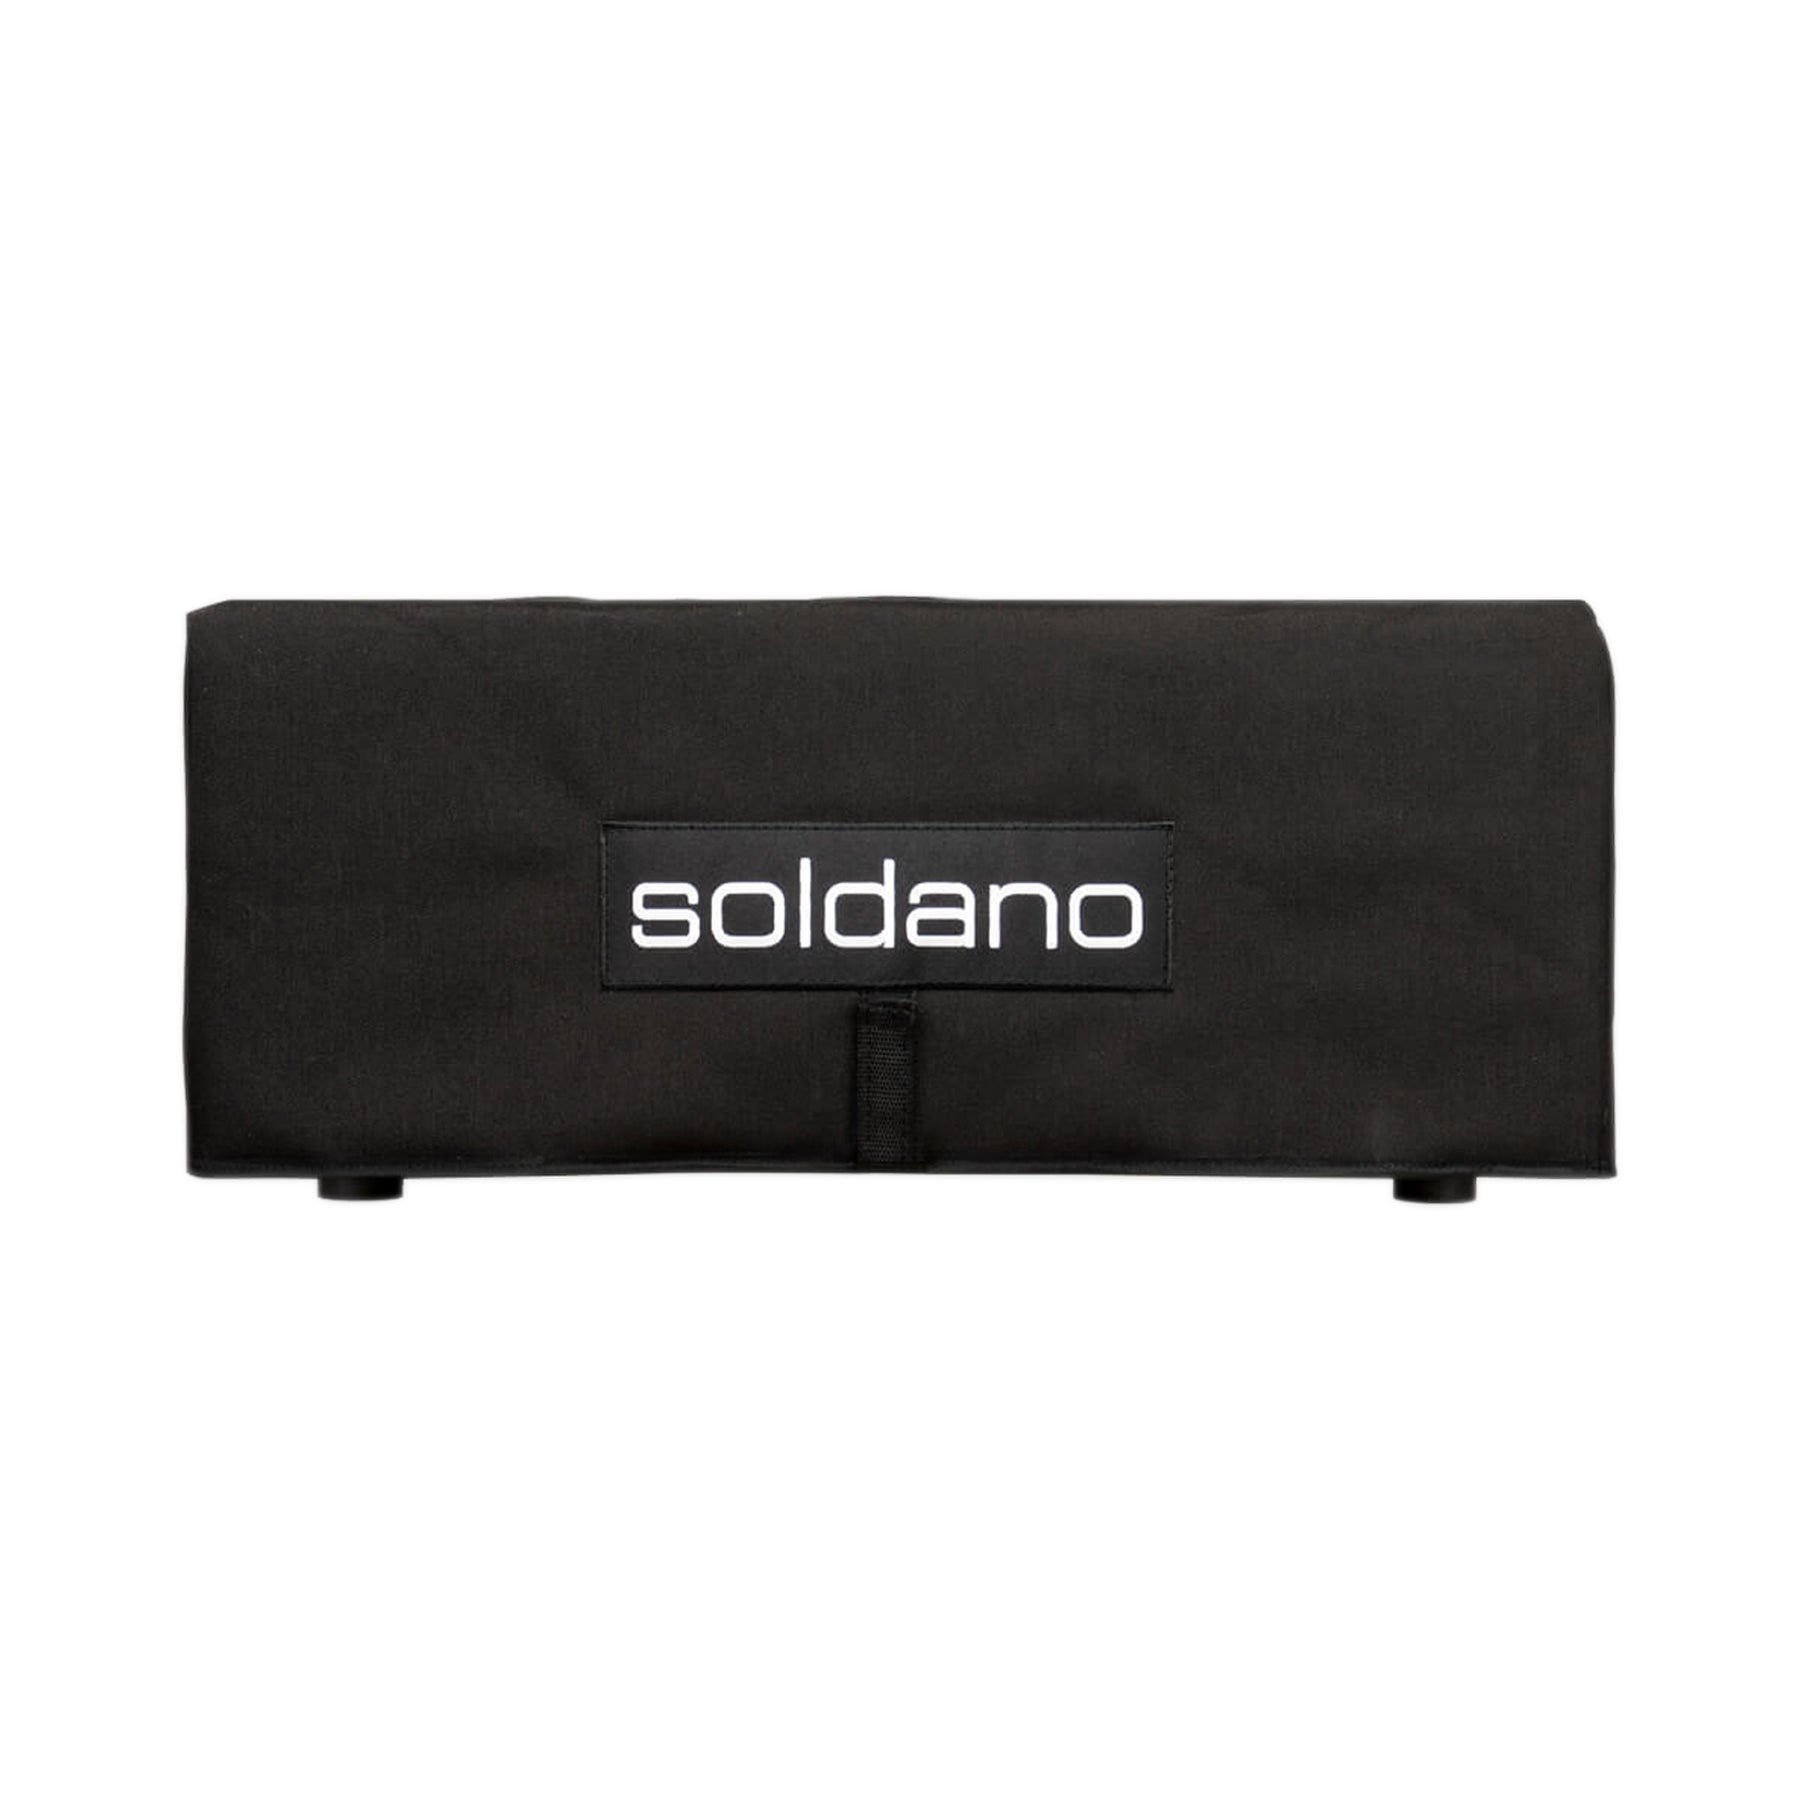 SOLDANO COVER FOR SLO-100 HEAD